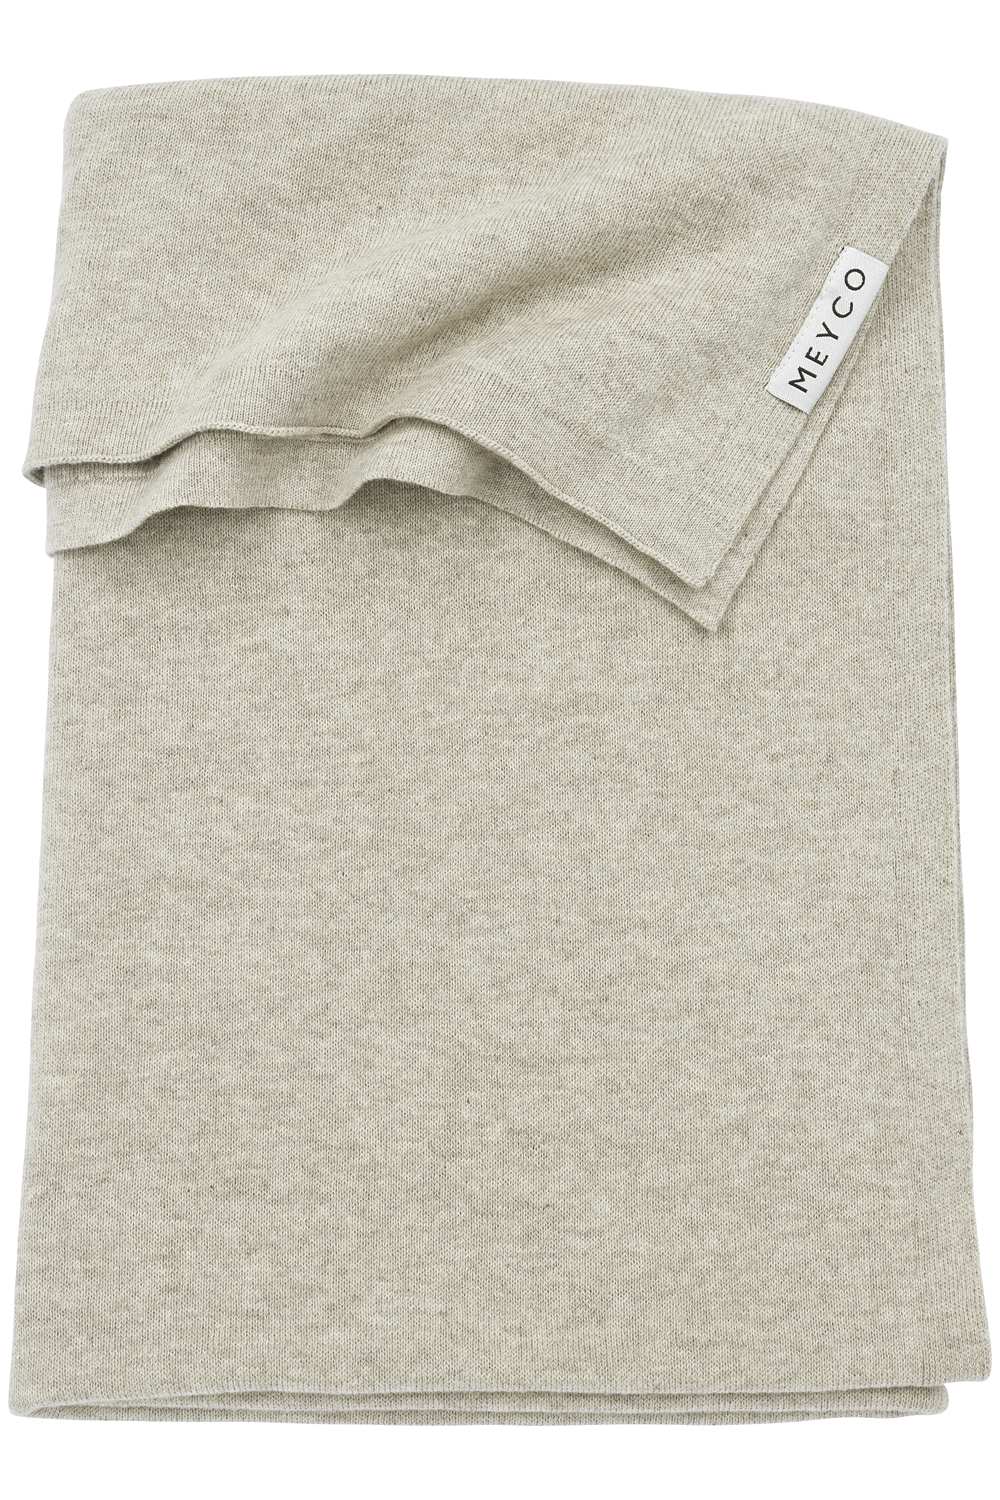 Crib Blanket Knit Basic - Sand Melange - 75x100cm